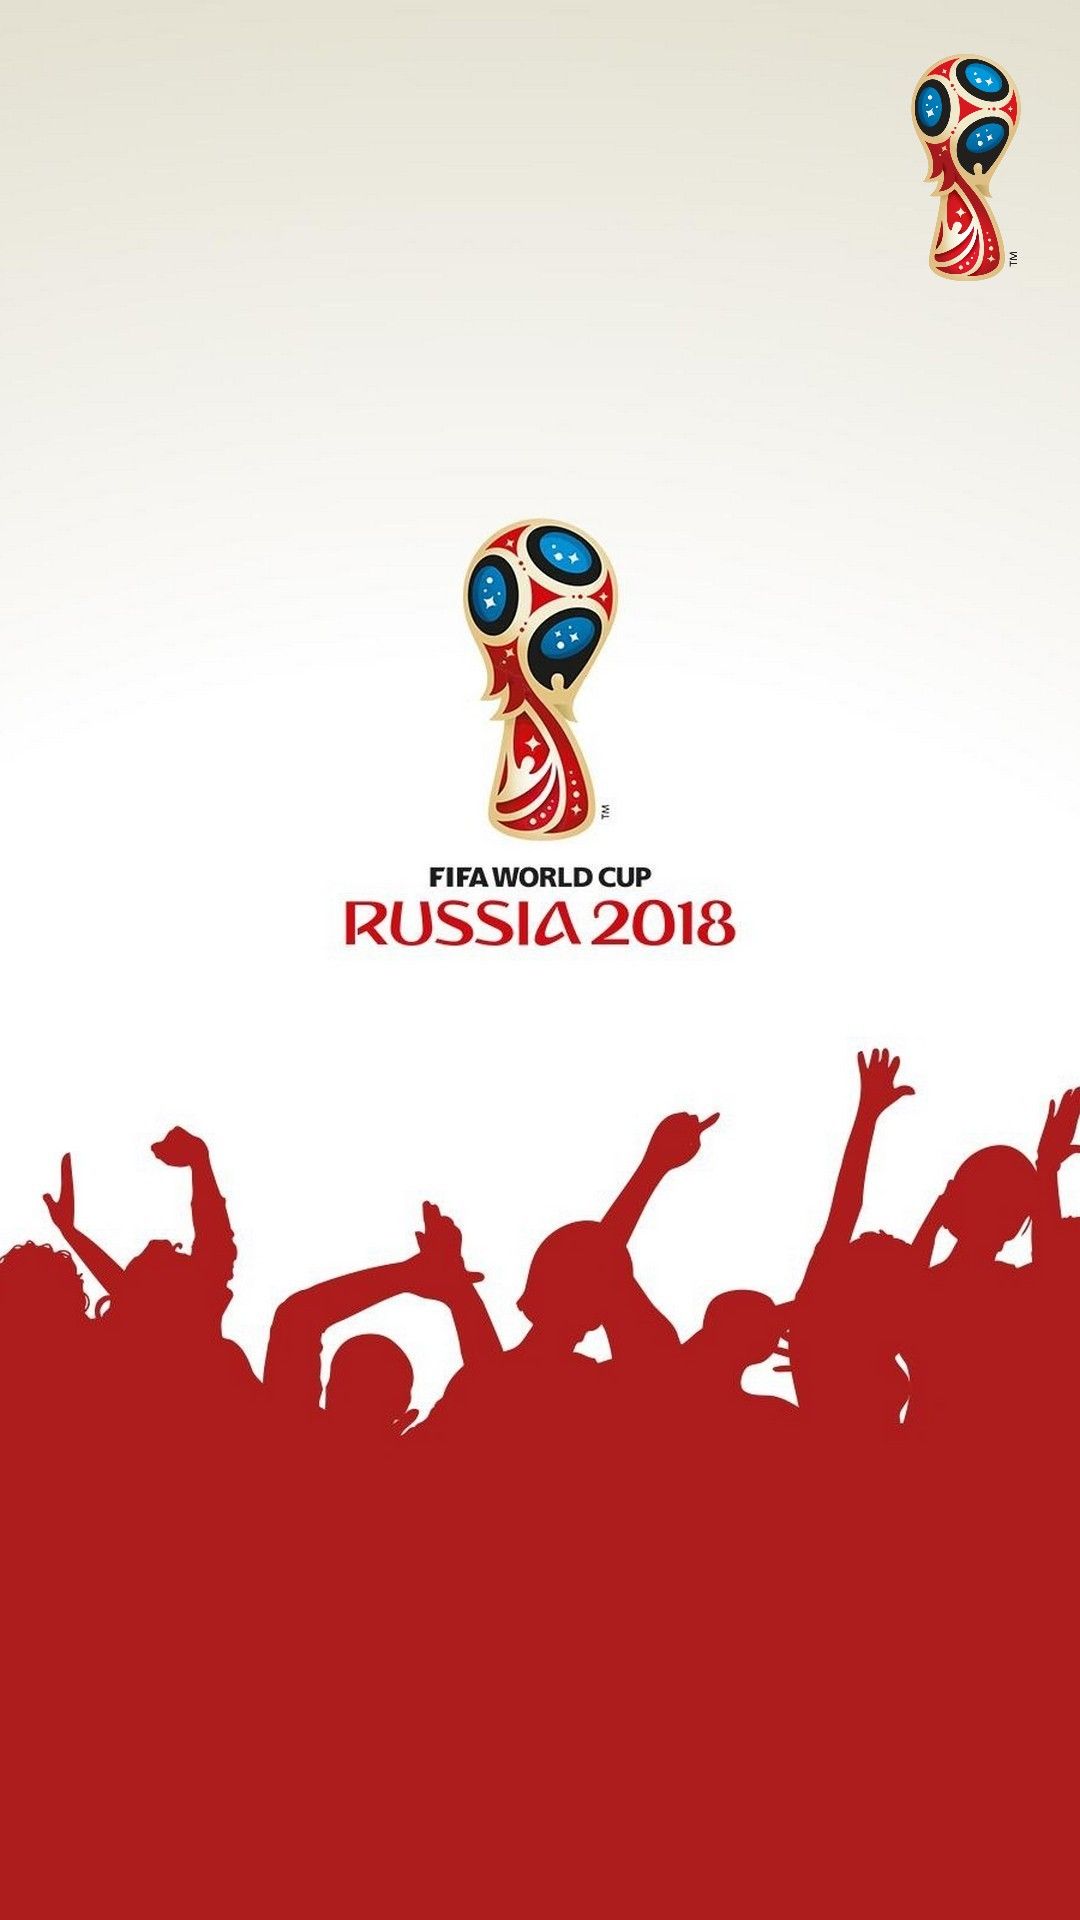 Messi World Cup 2022 Wallpaper Download  MOONAZ